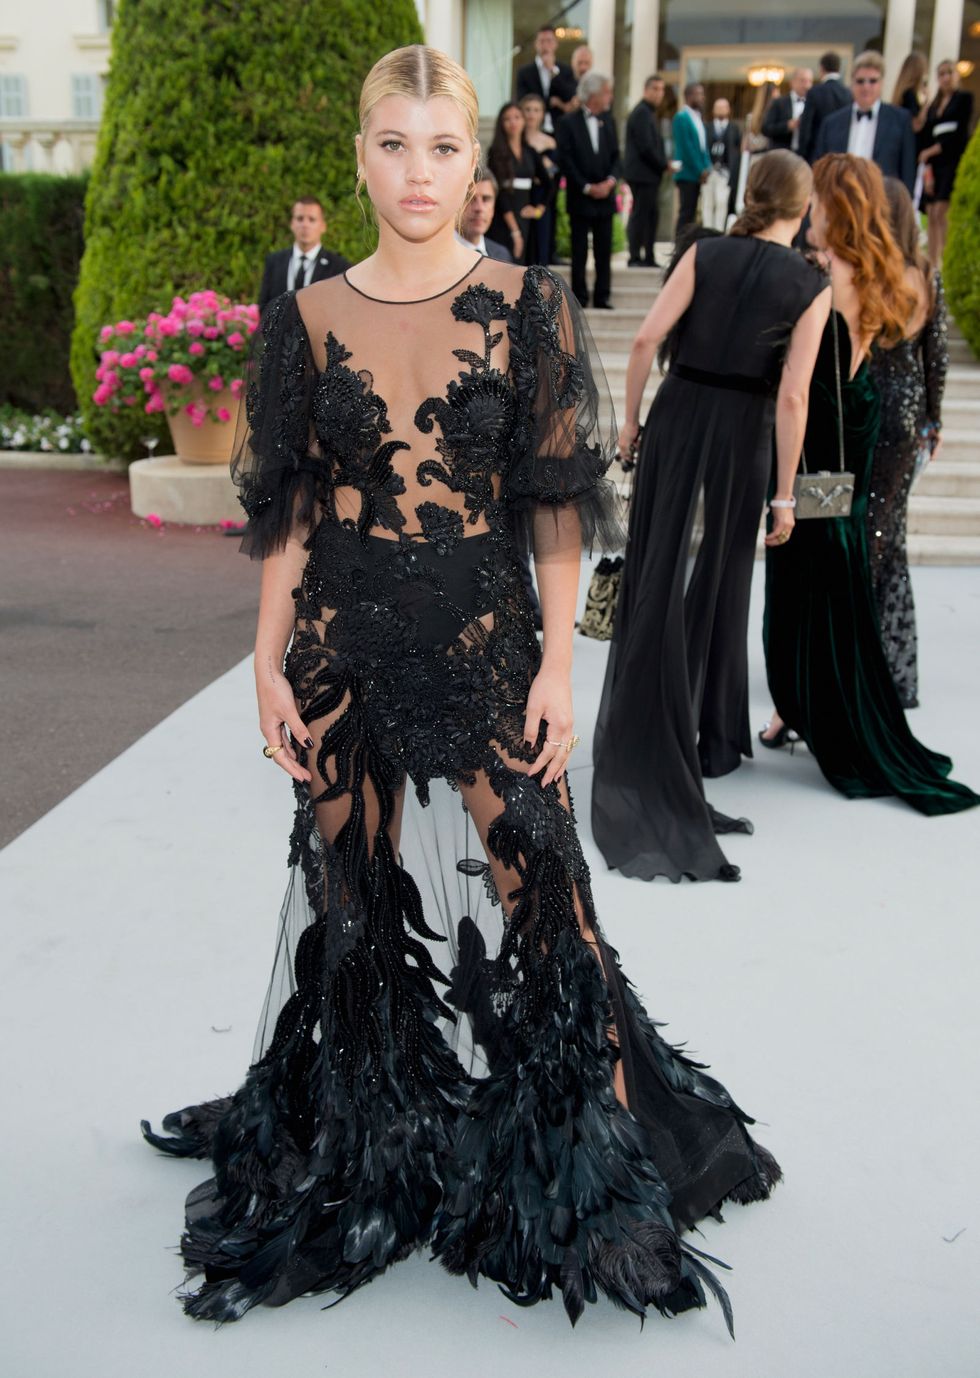 Sofia Richie in Alberta Ferretti couture dress at cannes amfAR gala 2017